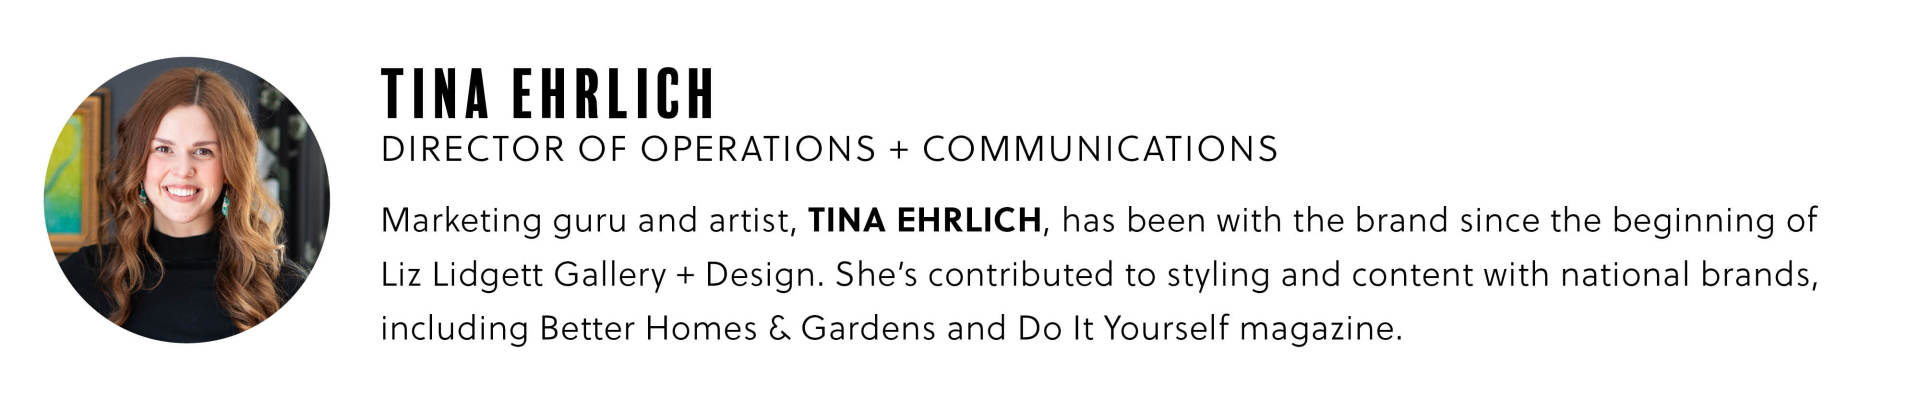 Tina Ehrlich author